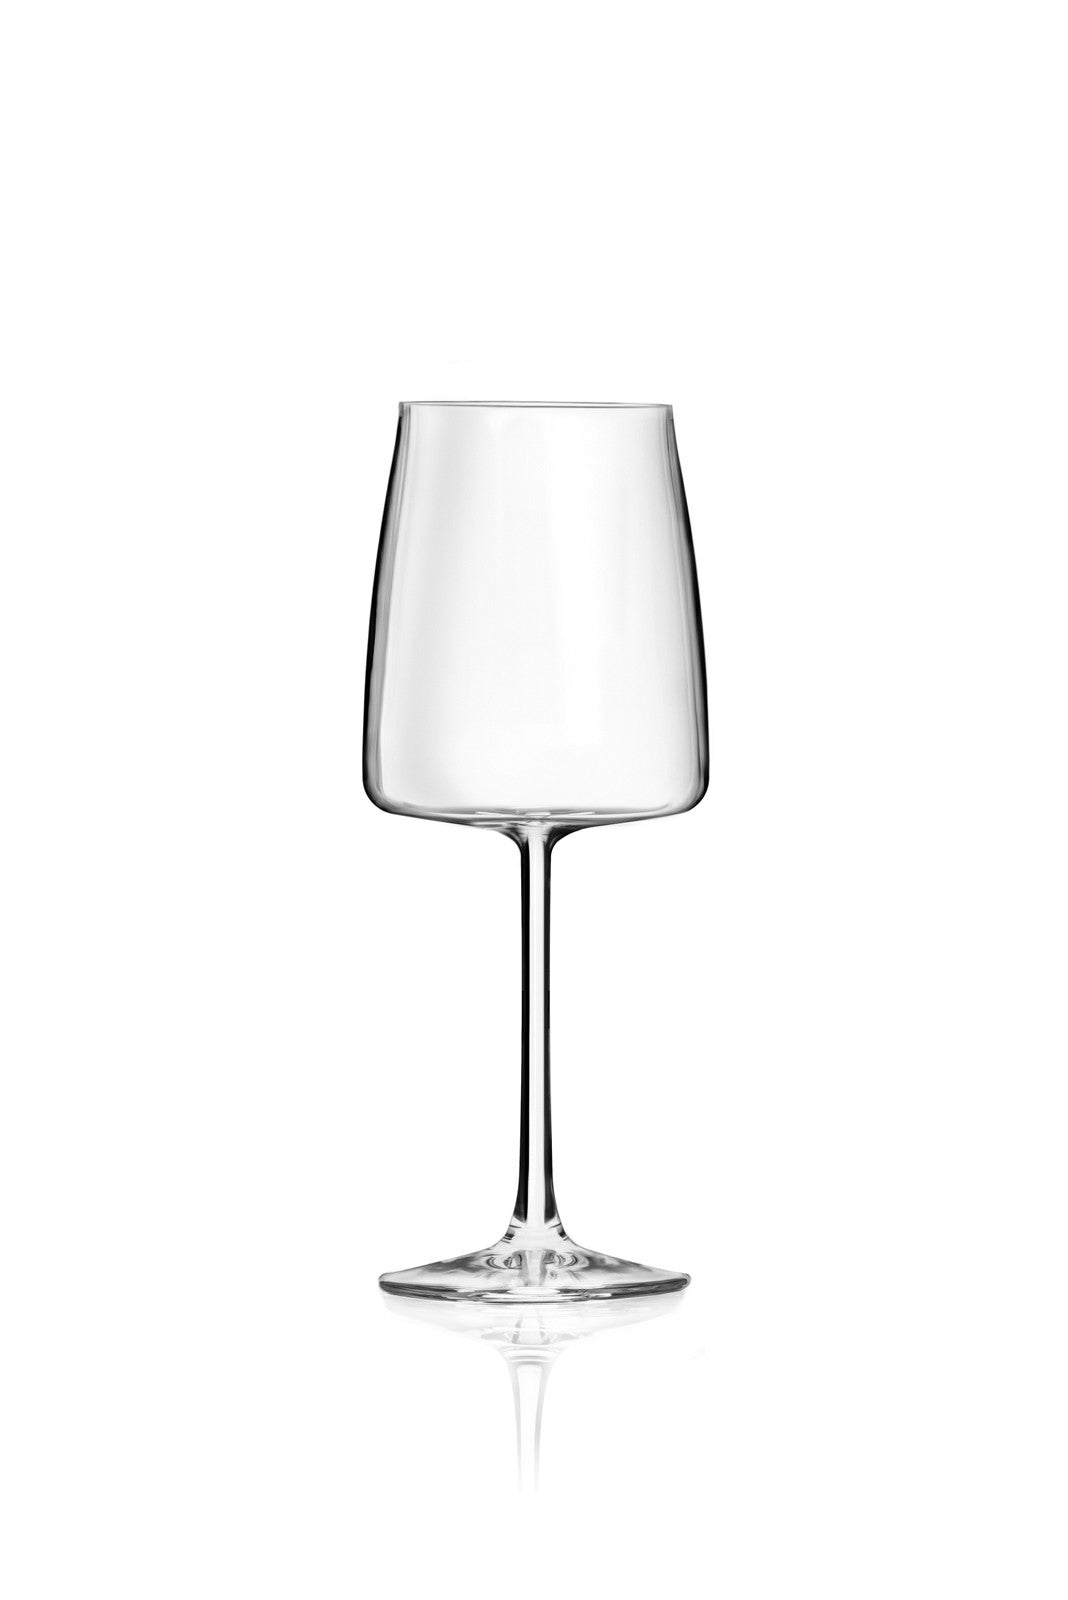 Essential | Ποτήρια λευκού κρασιού